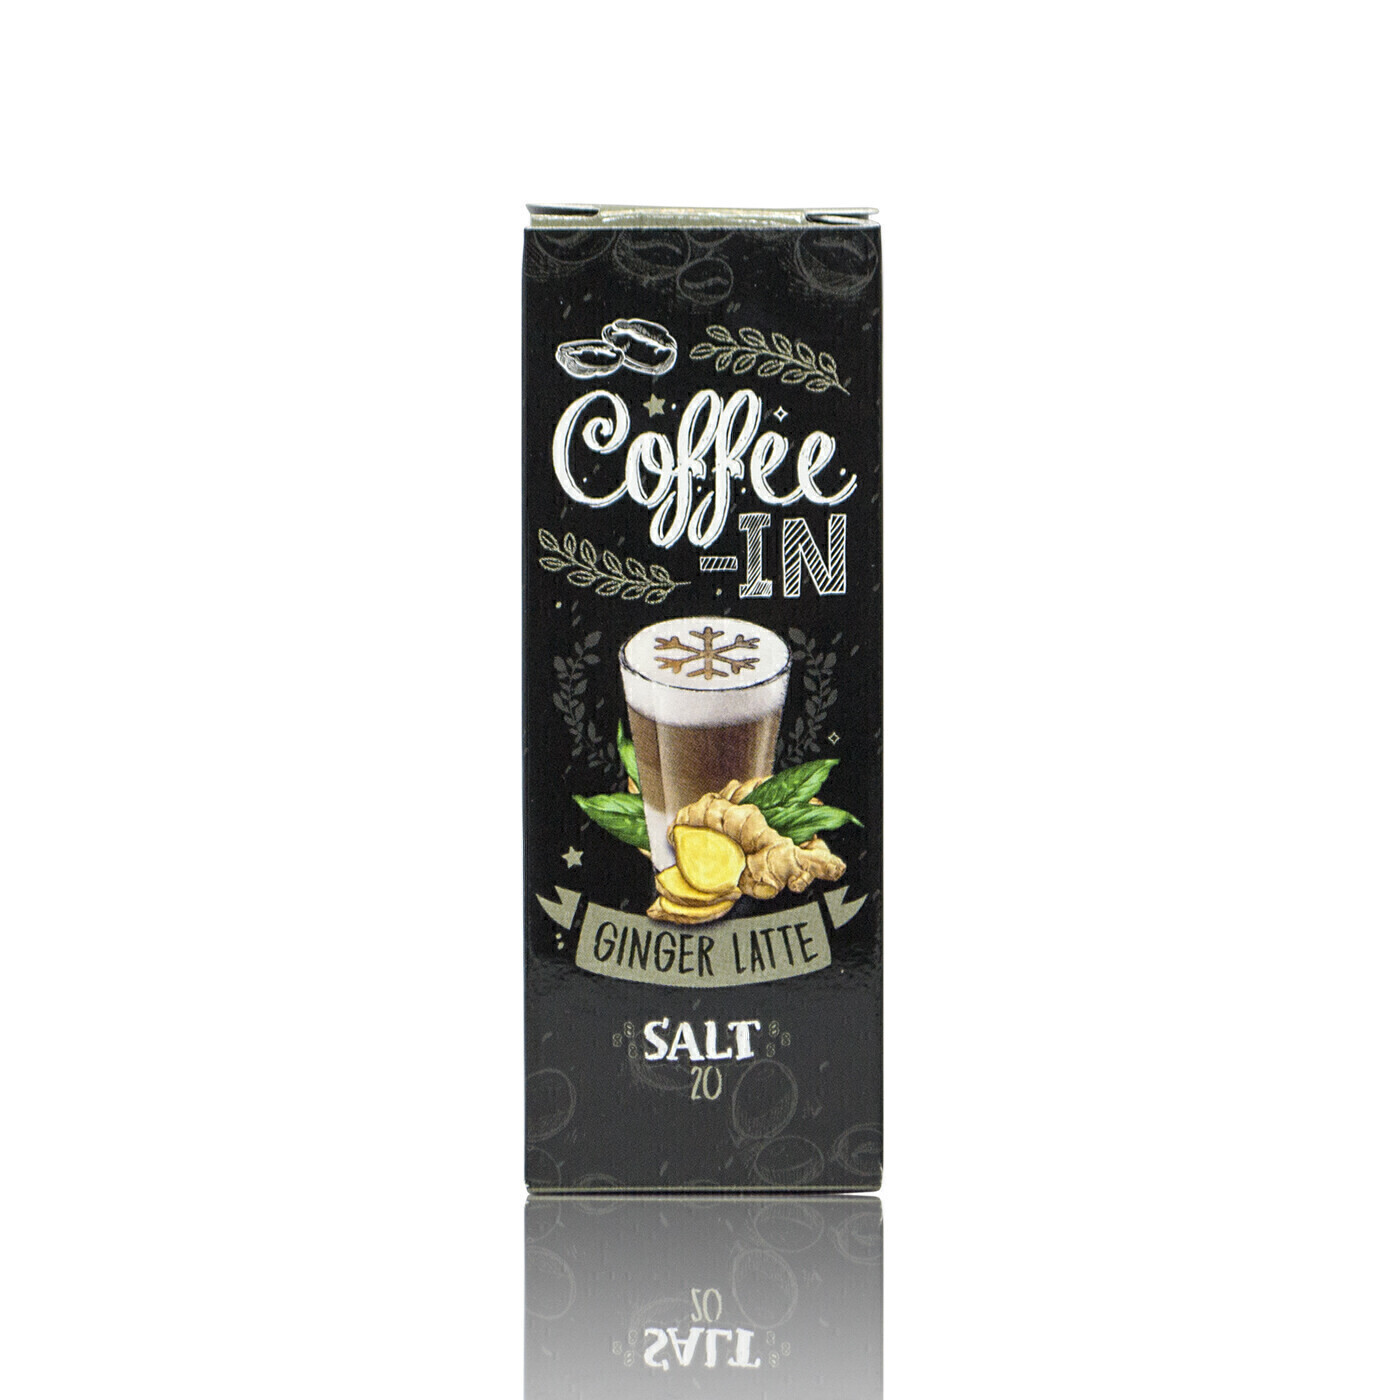 COFFEE-IN SALT: GINGER LATTE 20MG